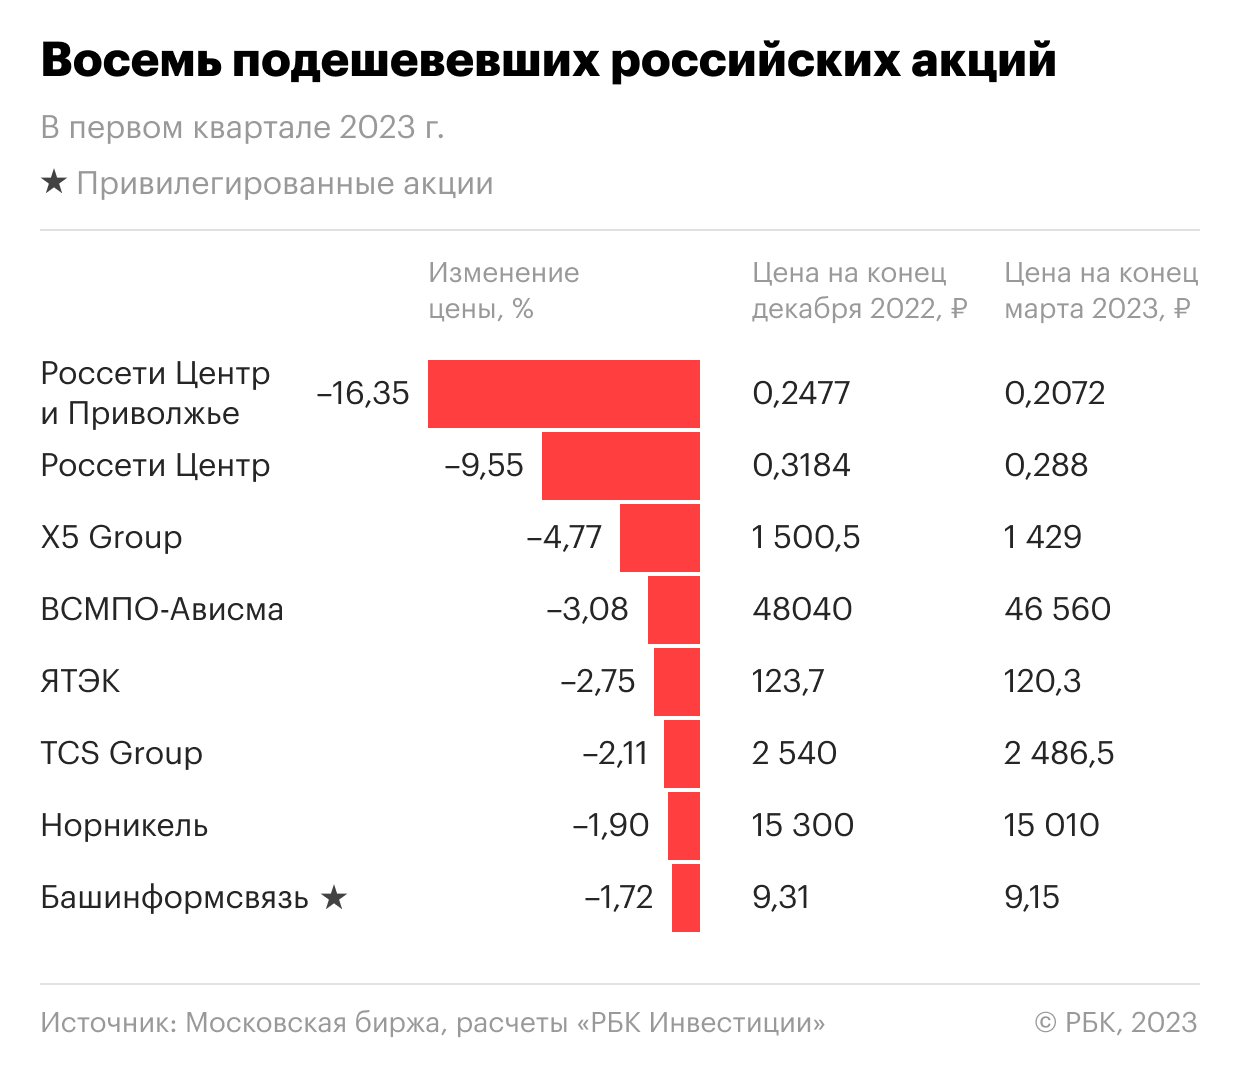 Акции российских компаний. Растущие акции российских компаний. Российский рынок акций. Статистика акций за 2023 год.